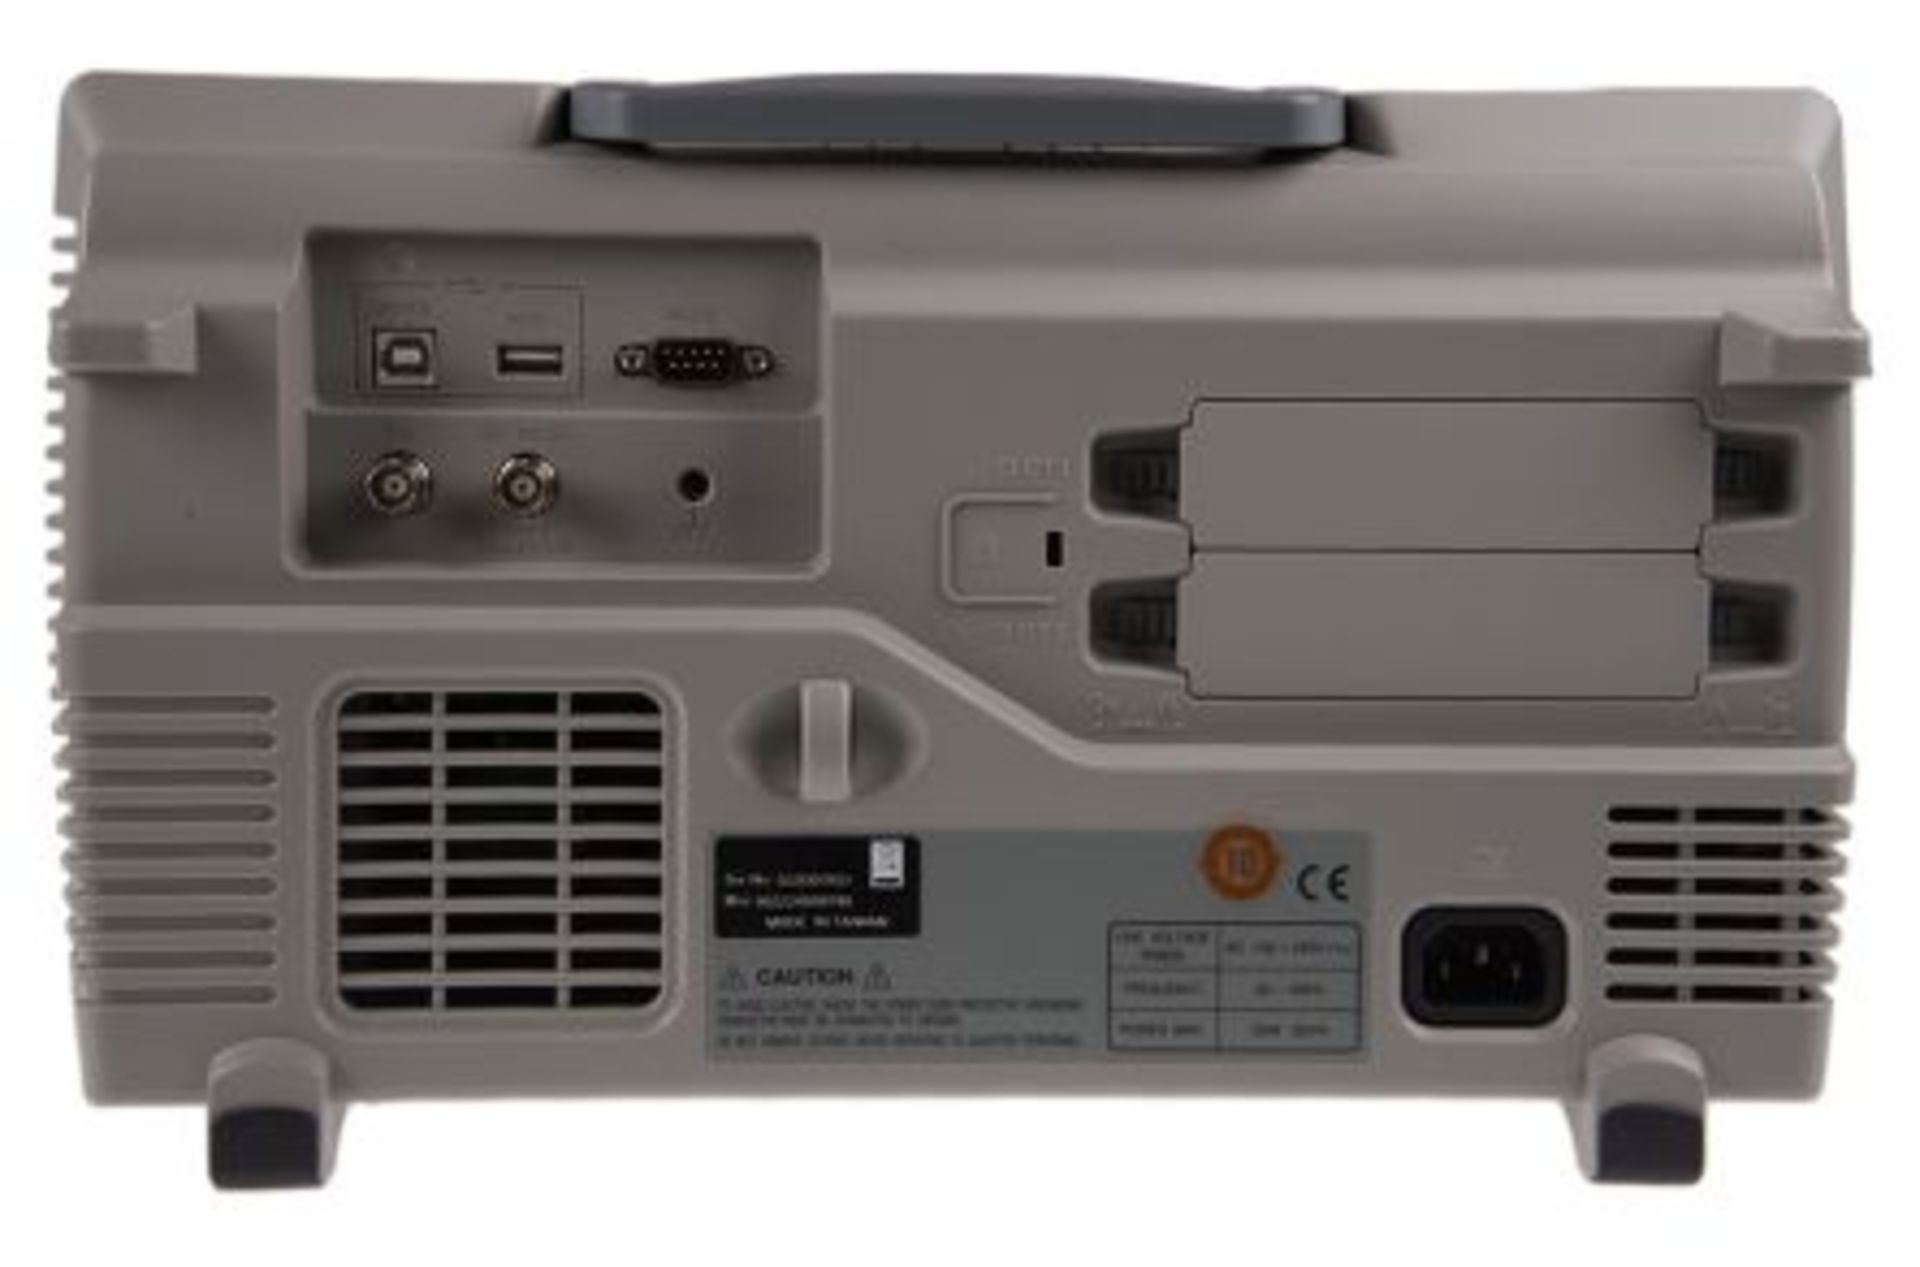 IDS-2202A Digital Oscilloscope, Digital Storage, 2 Channels, 200MHz - Image 2 of 3